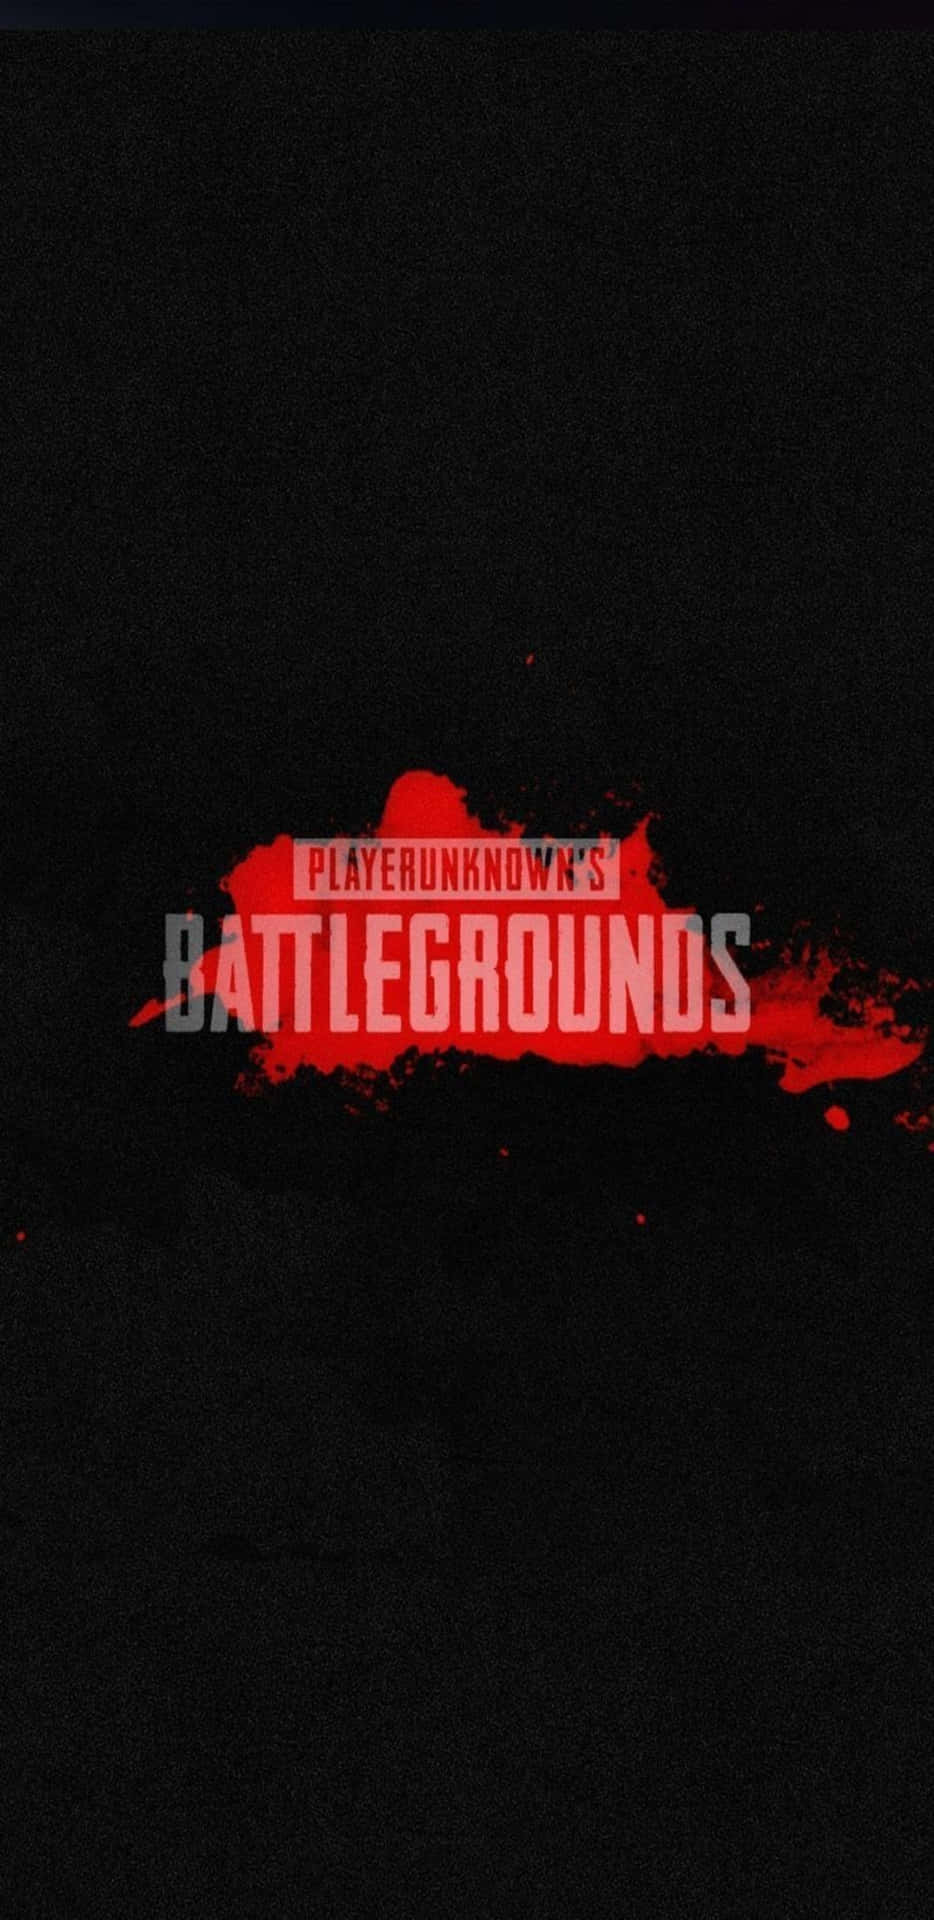 Pixel 3xl Playerunknown's Battlegrounds Background Title With Red Splash